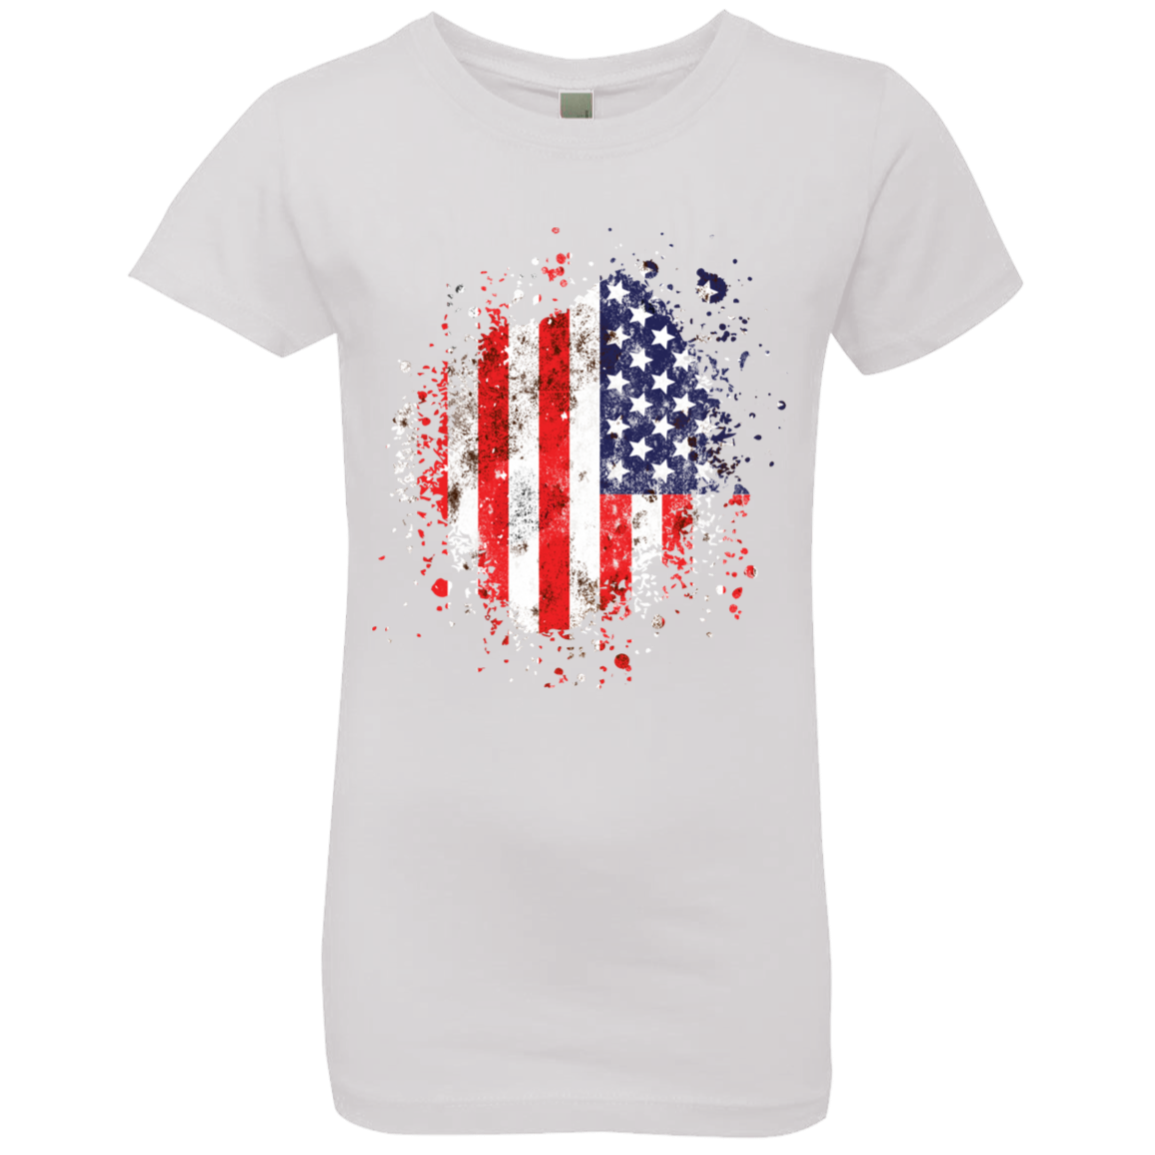 American Flag - Girls', Teen, Youth T-Shirt